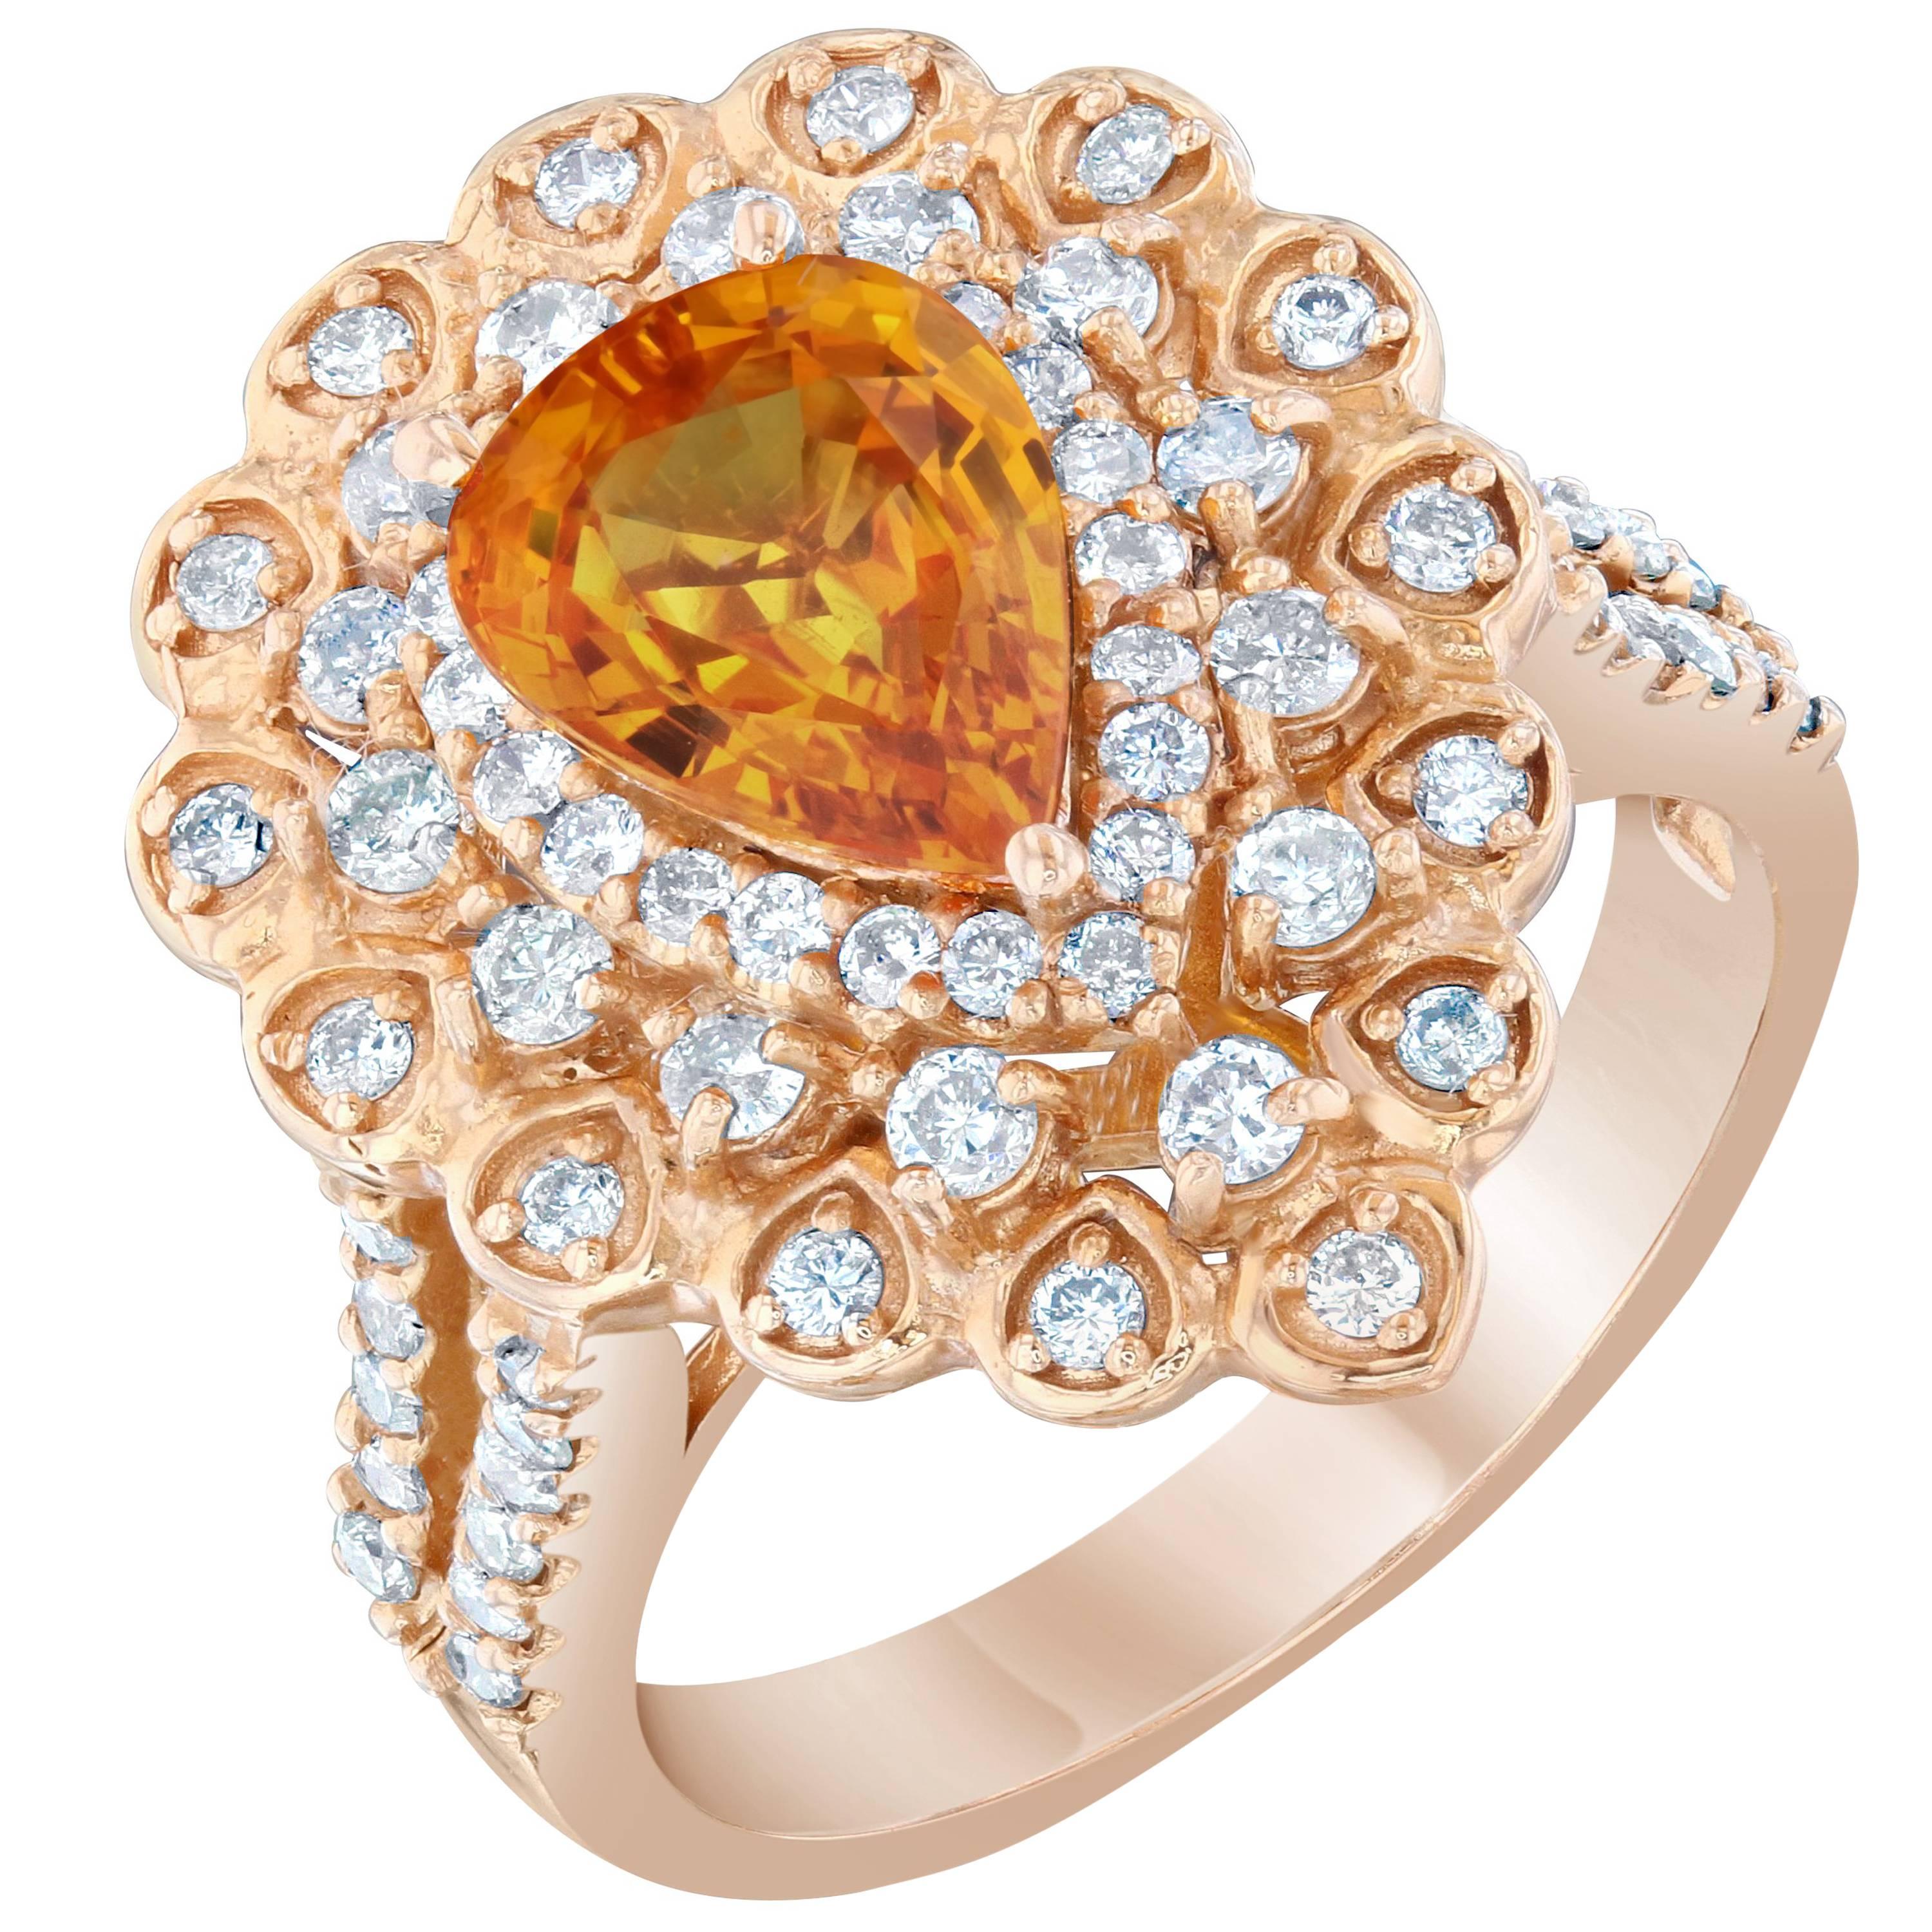 3.02 Carat Orange Sapphire Diamond Cocktail Ring